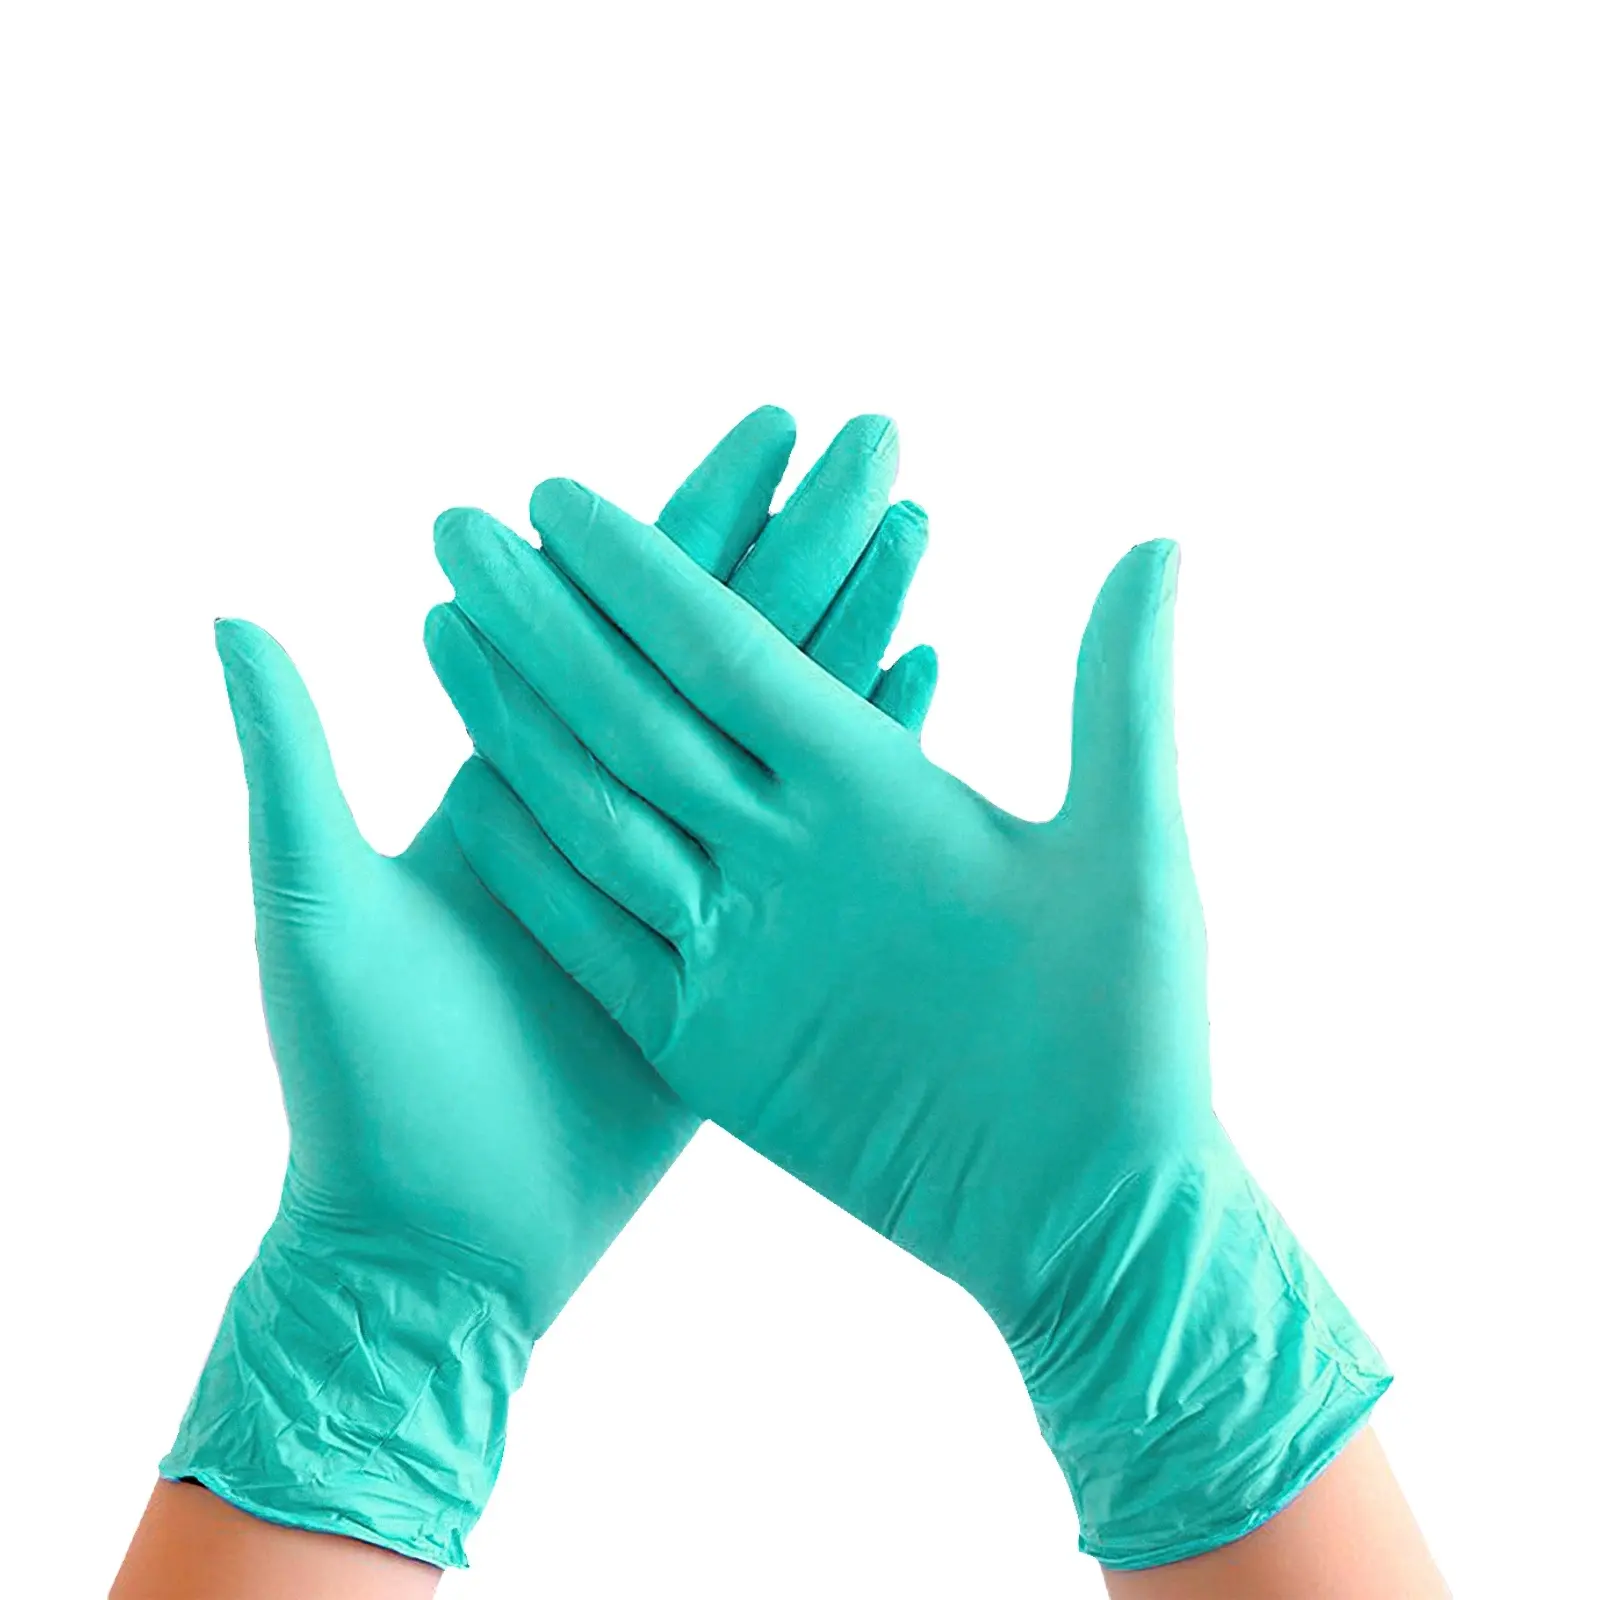 Nitrile Gloves Manufacturers Cheap Green Nitrile Exam Gloves Disposable Wholesale Powder Free Nitrile Gloves Making Machine